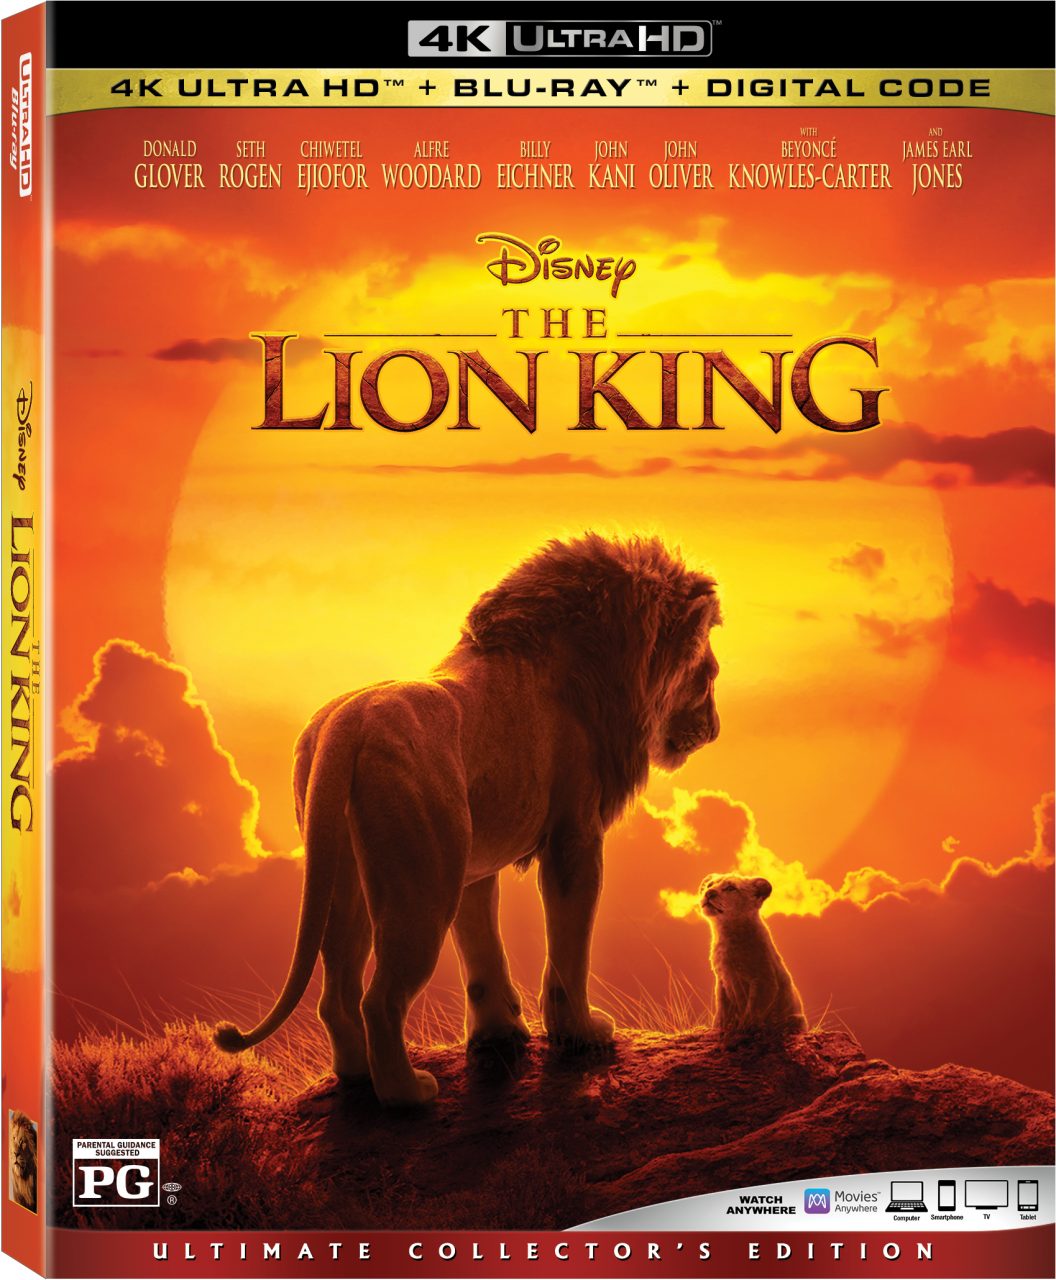 The Lion King 4K Ultra HD Combo Pack cover (Walt Disney Studios Home Entertainment)